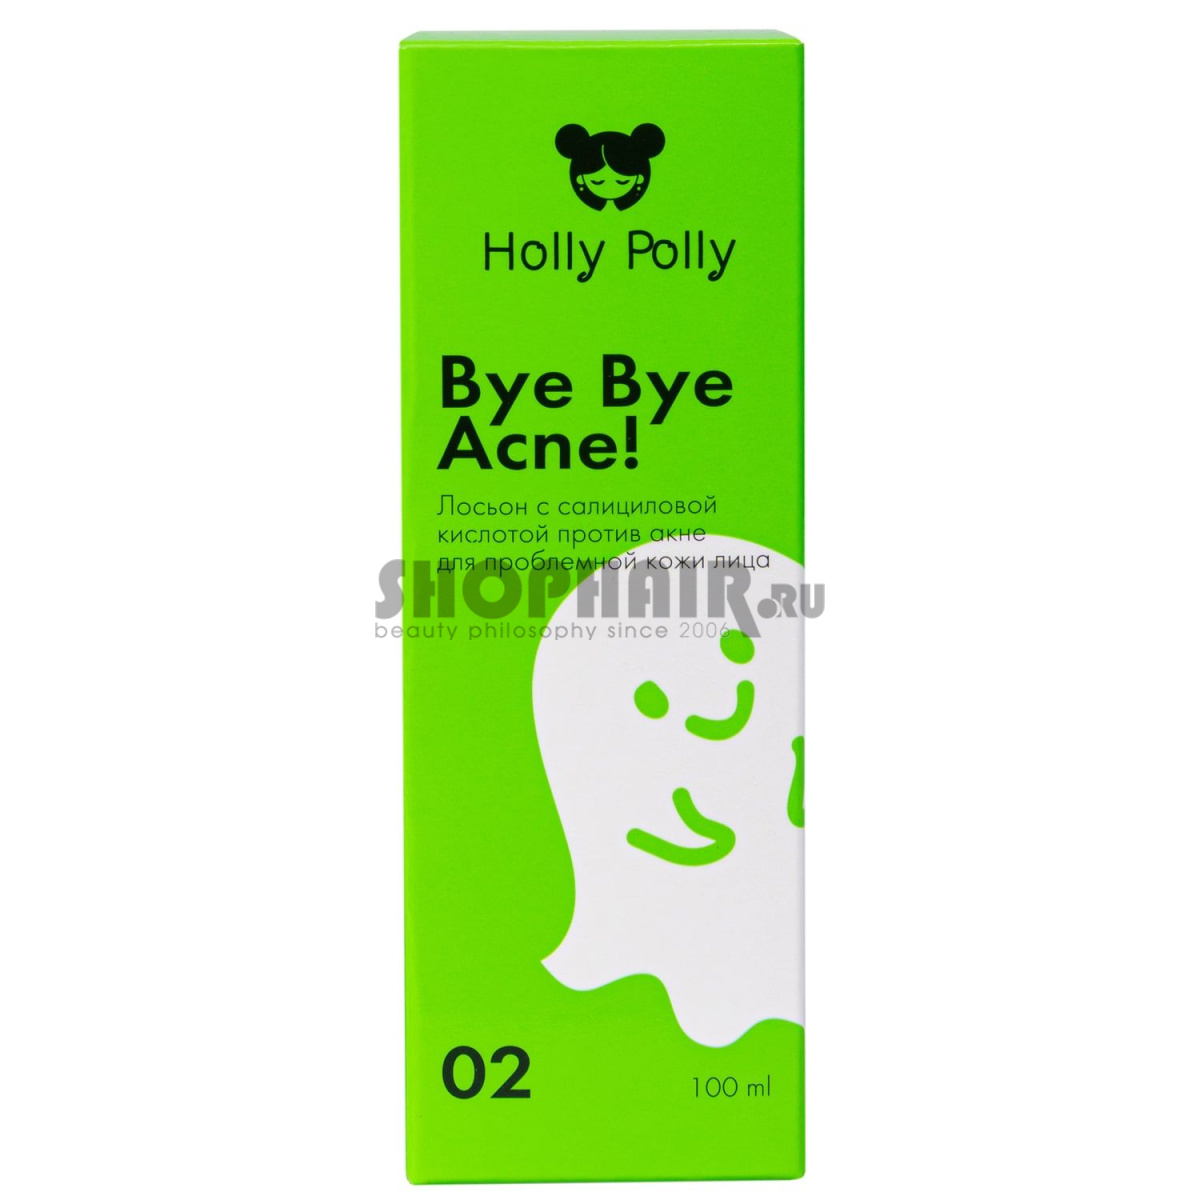 Holly Polly Bye Bye Acne! - Лосьон с 2% салициловой кислотой против акне и воспалений 100 мл Holly Polly (Россия) купить по цене 279 руб.